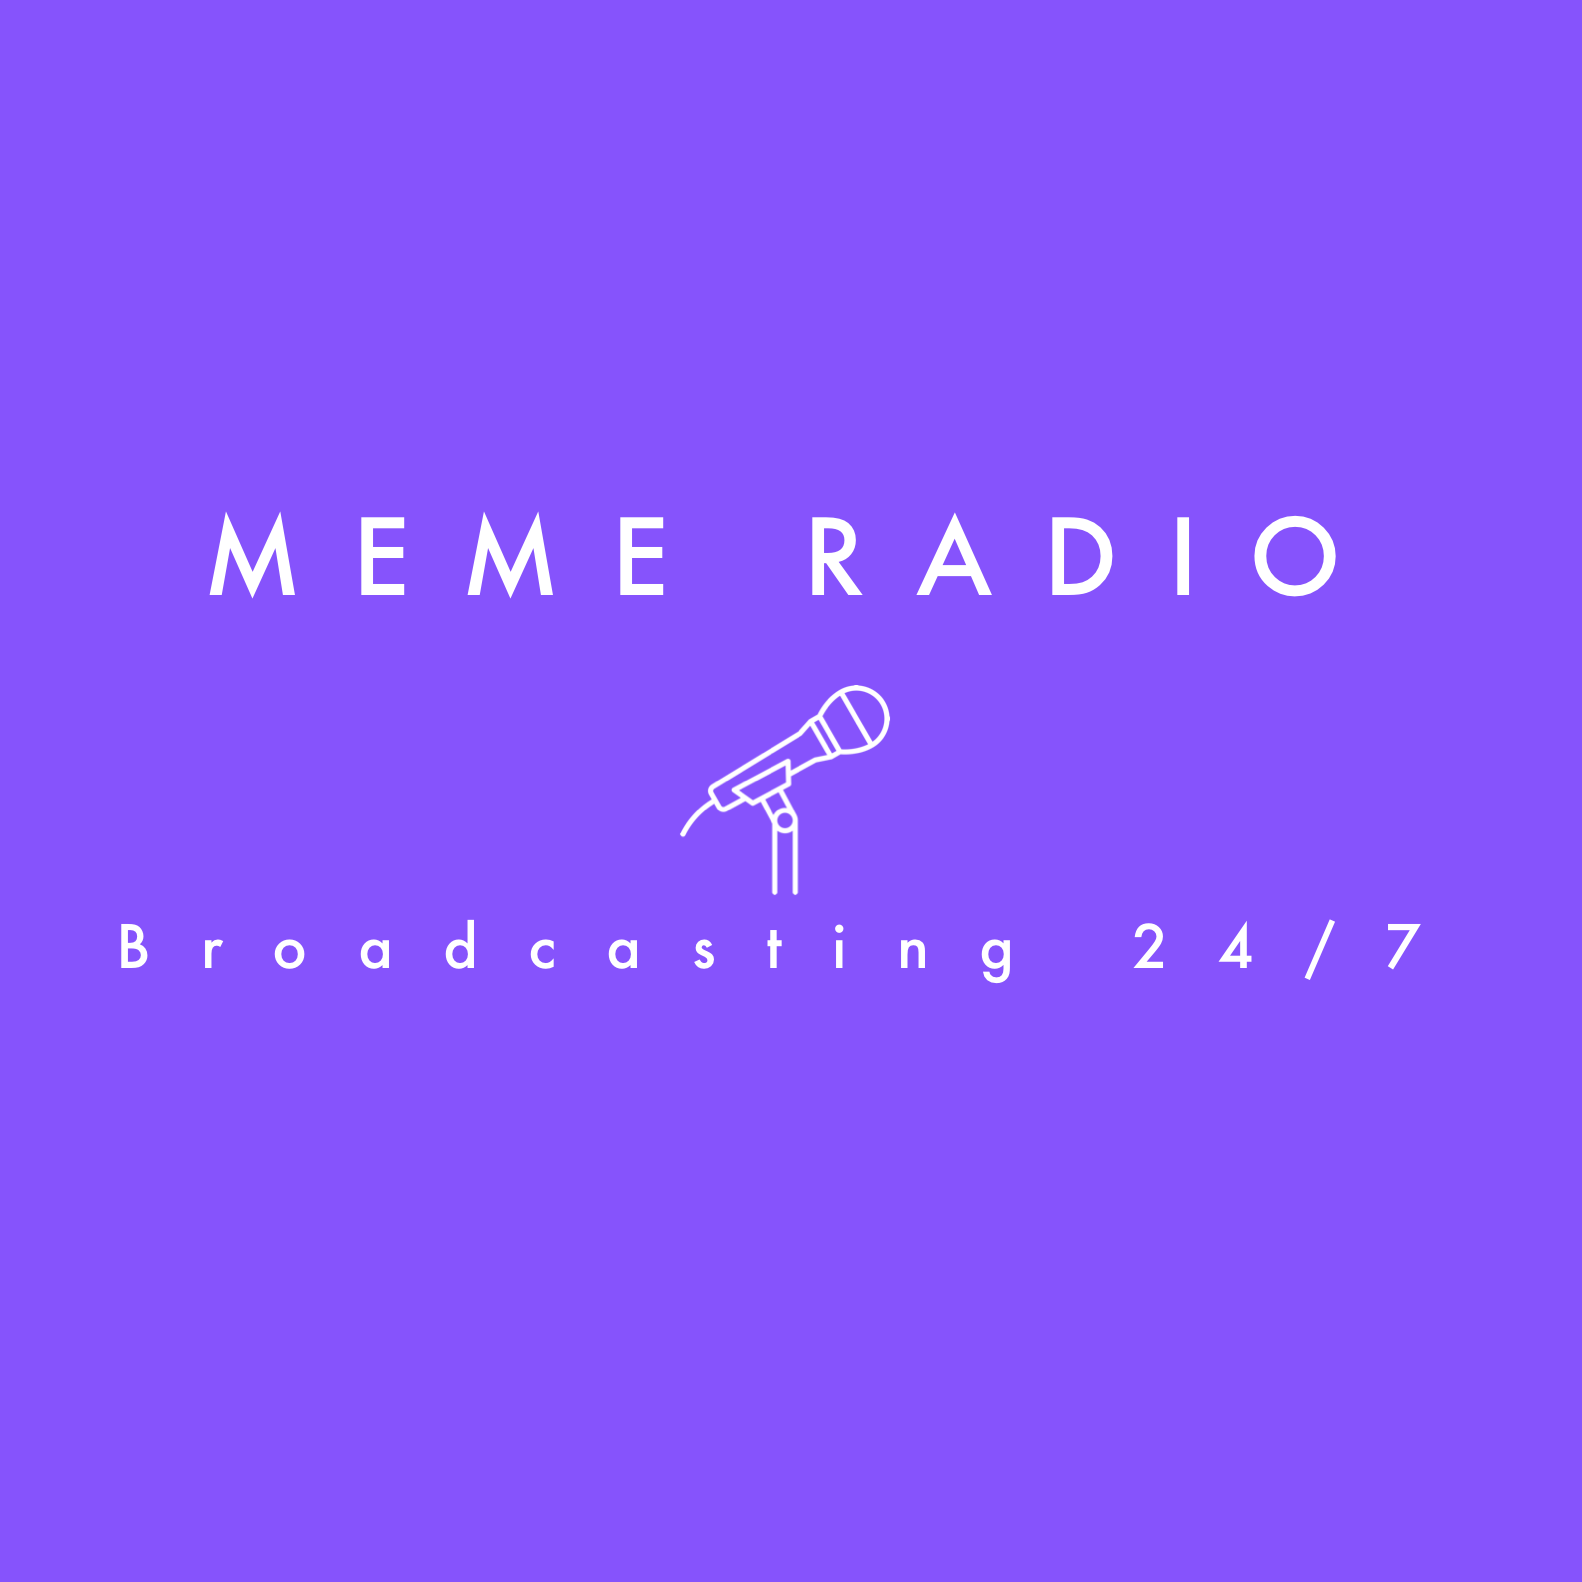 Meme radio